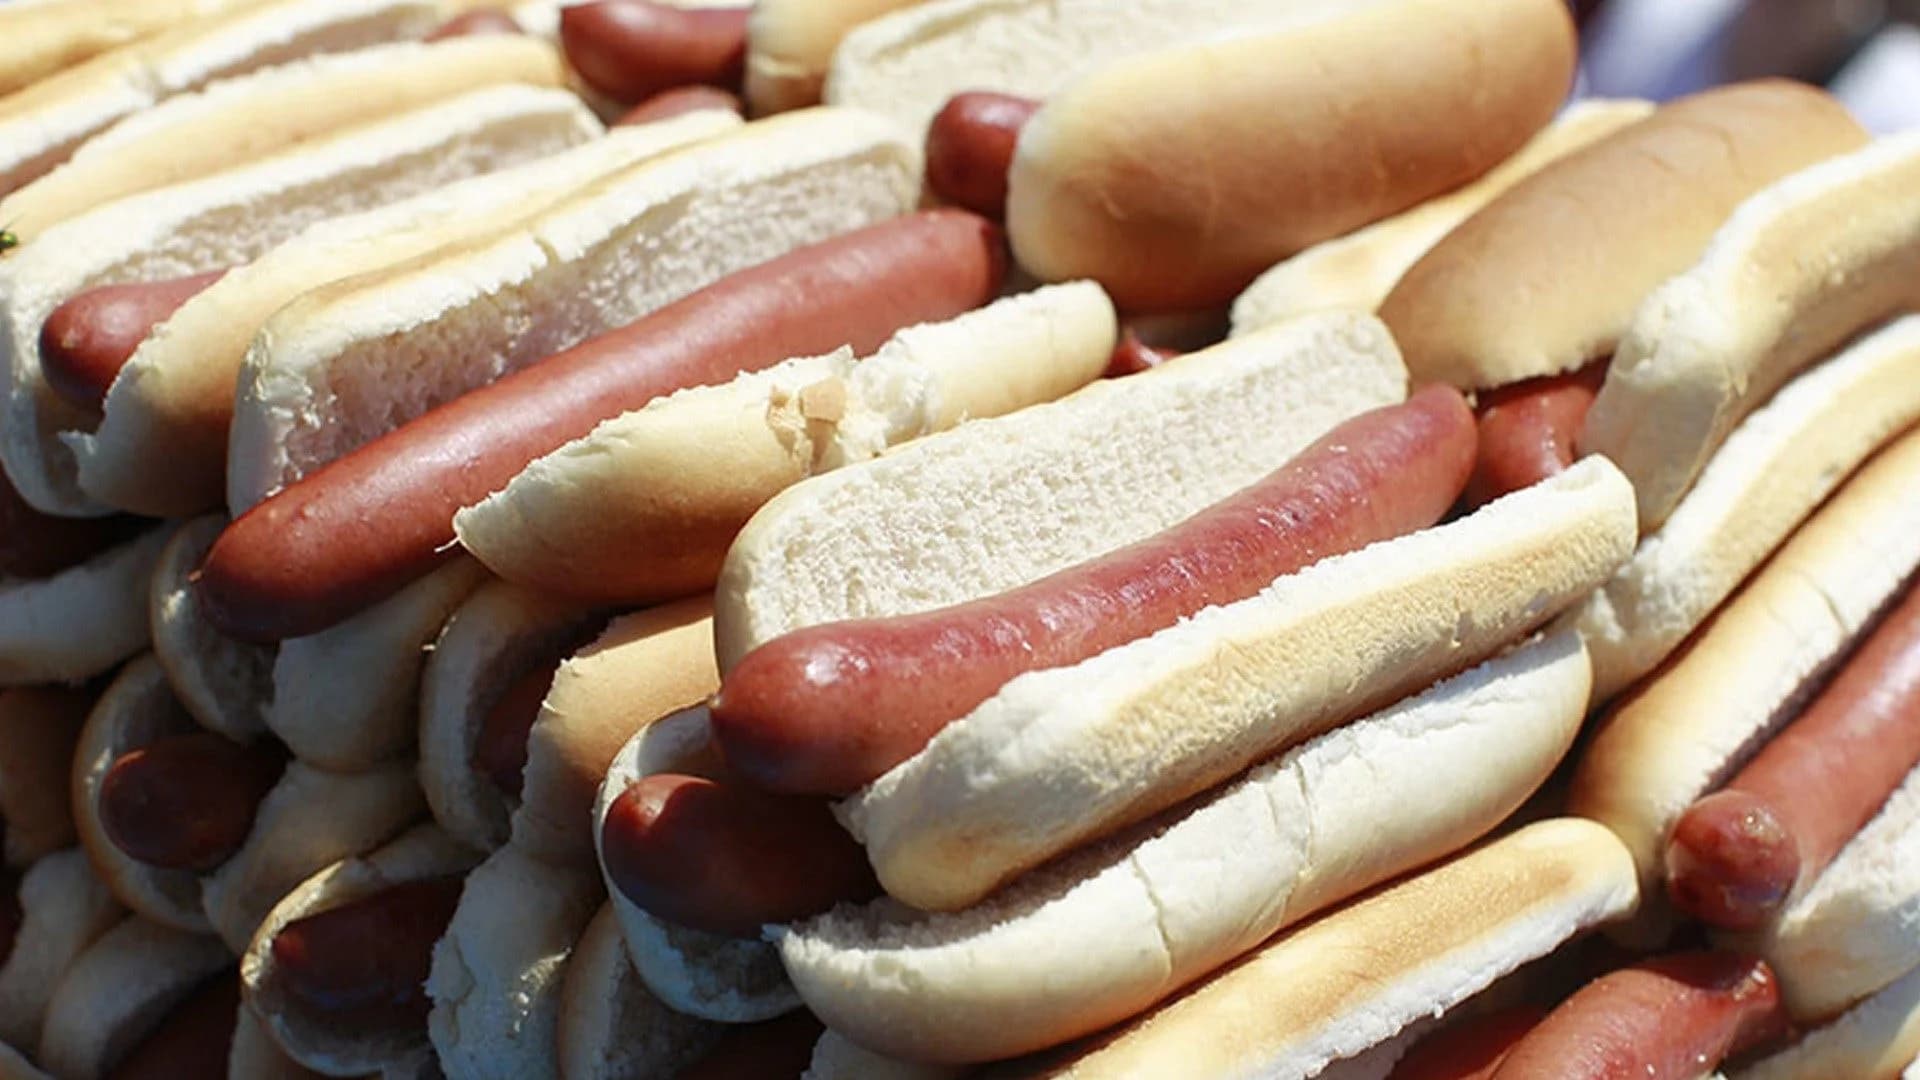 National Hot Dog Day celebrates summertime favorite